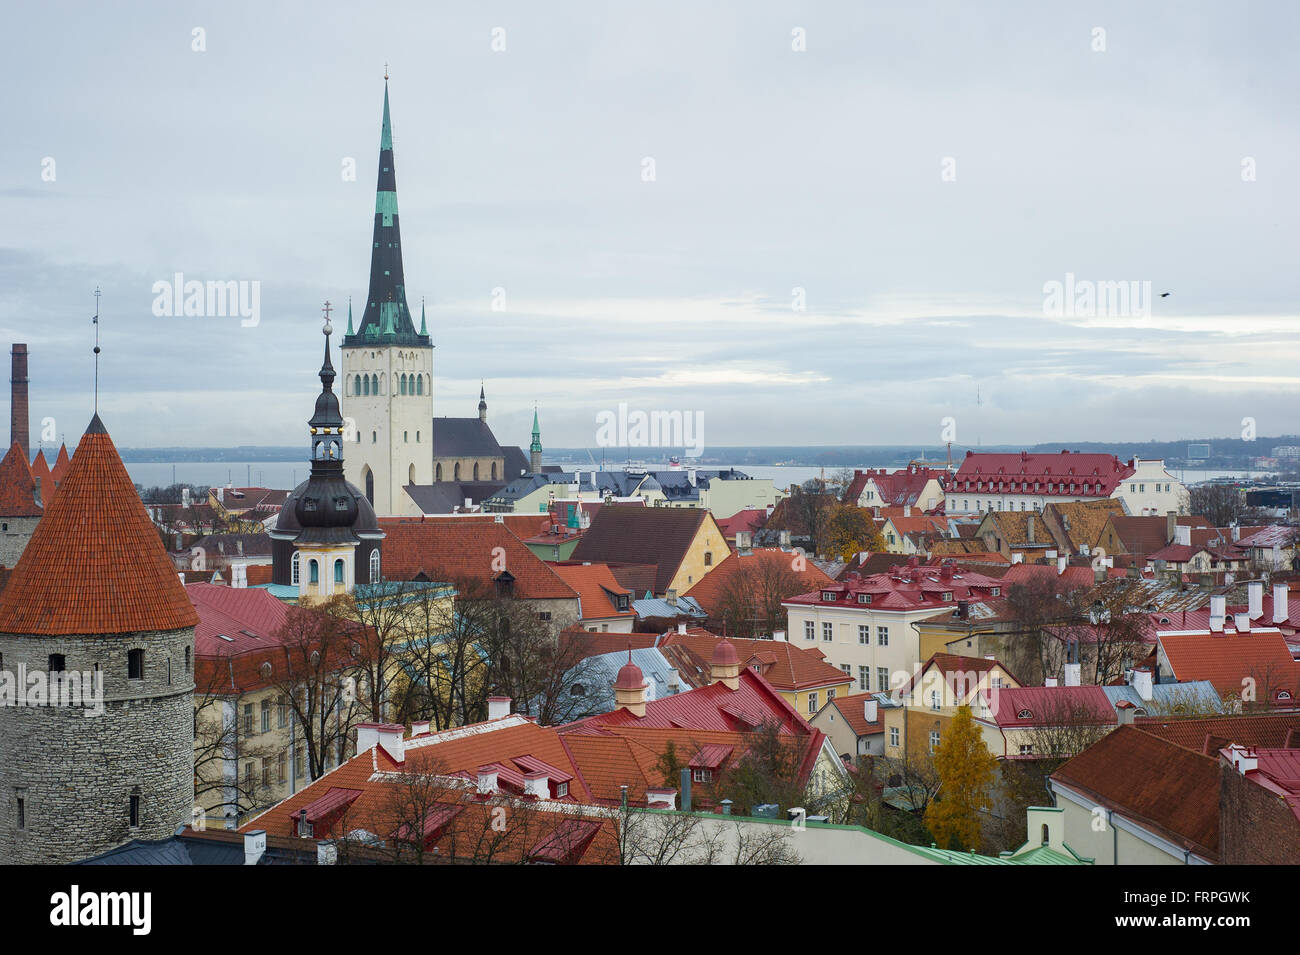 Tallinn, Estonia, Europa, miembro de la Unión Europea, el euro, la moneda, el Eurogrupo, post soviético, Internet, Skype, el capital, la ciudad vieja, mar orth Foto de stock